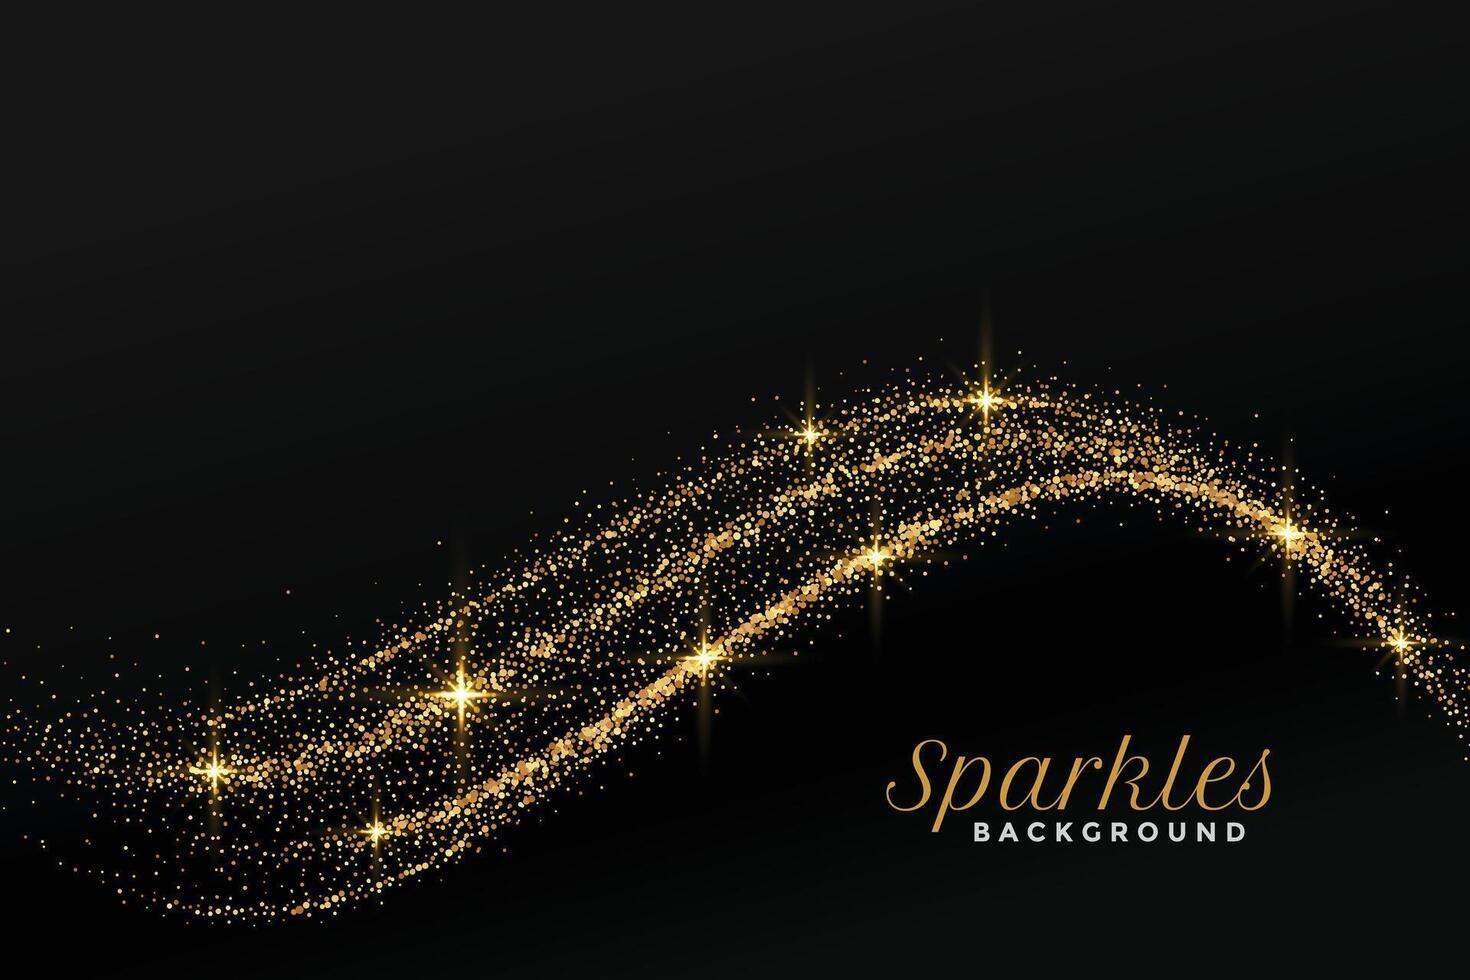 golden sparkles flowing in wave background design vector